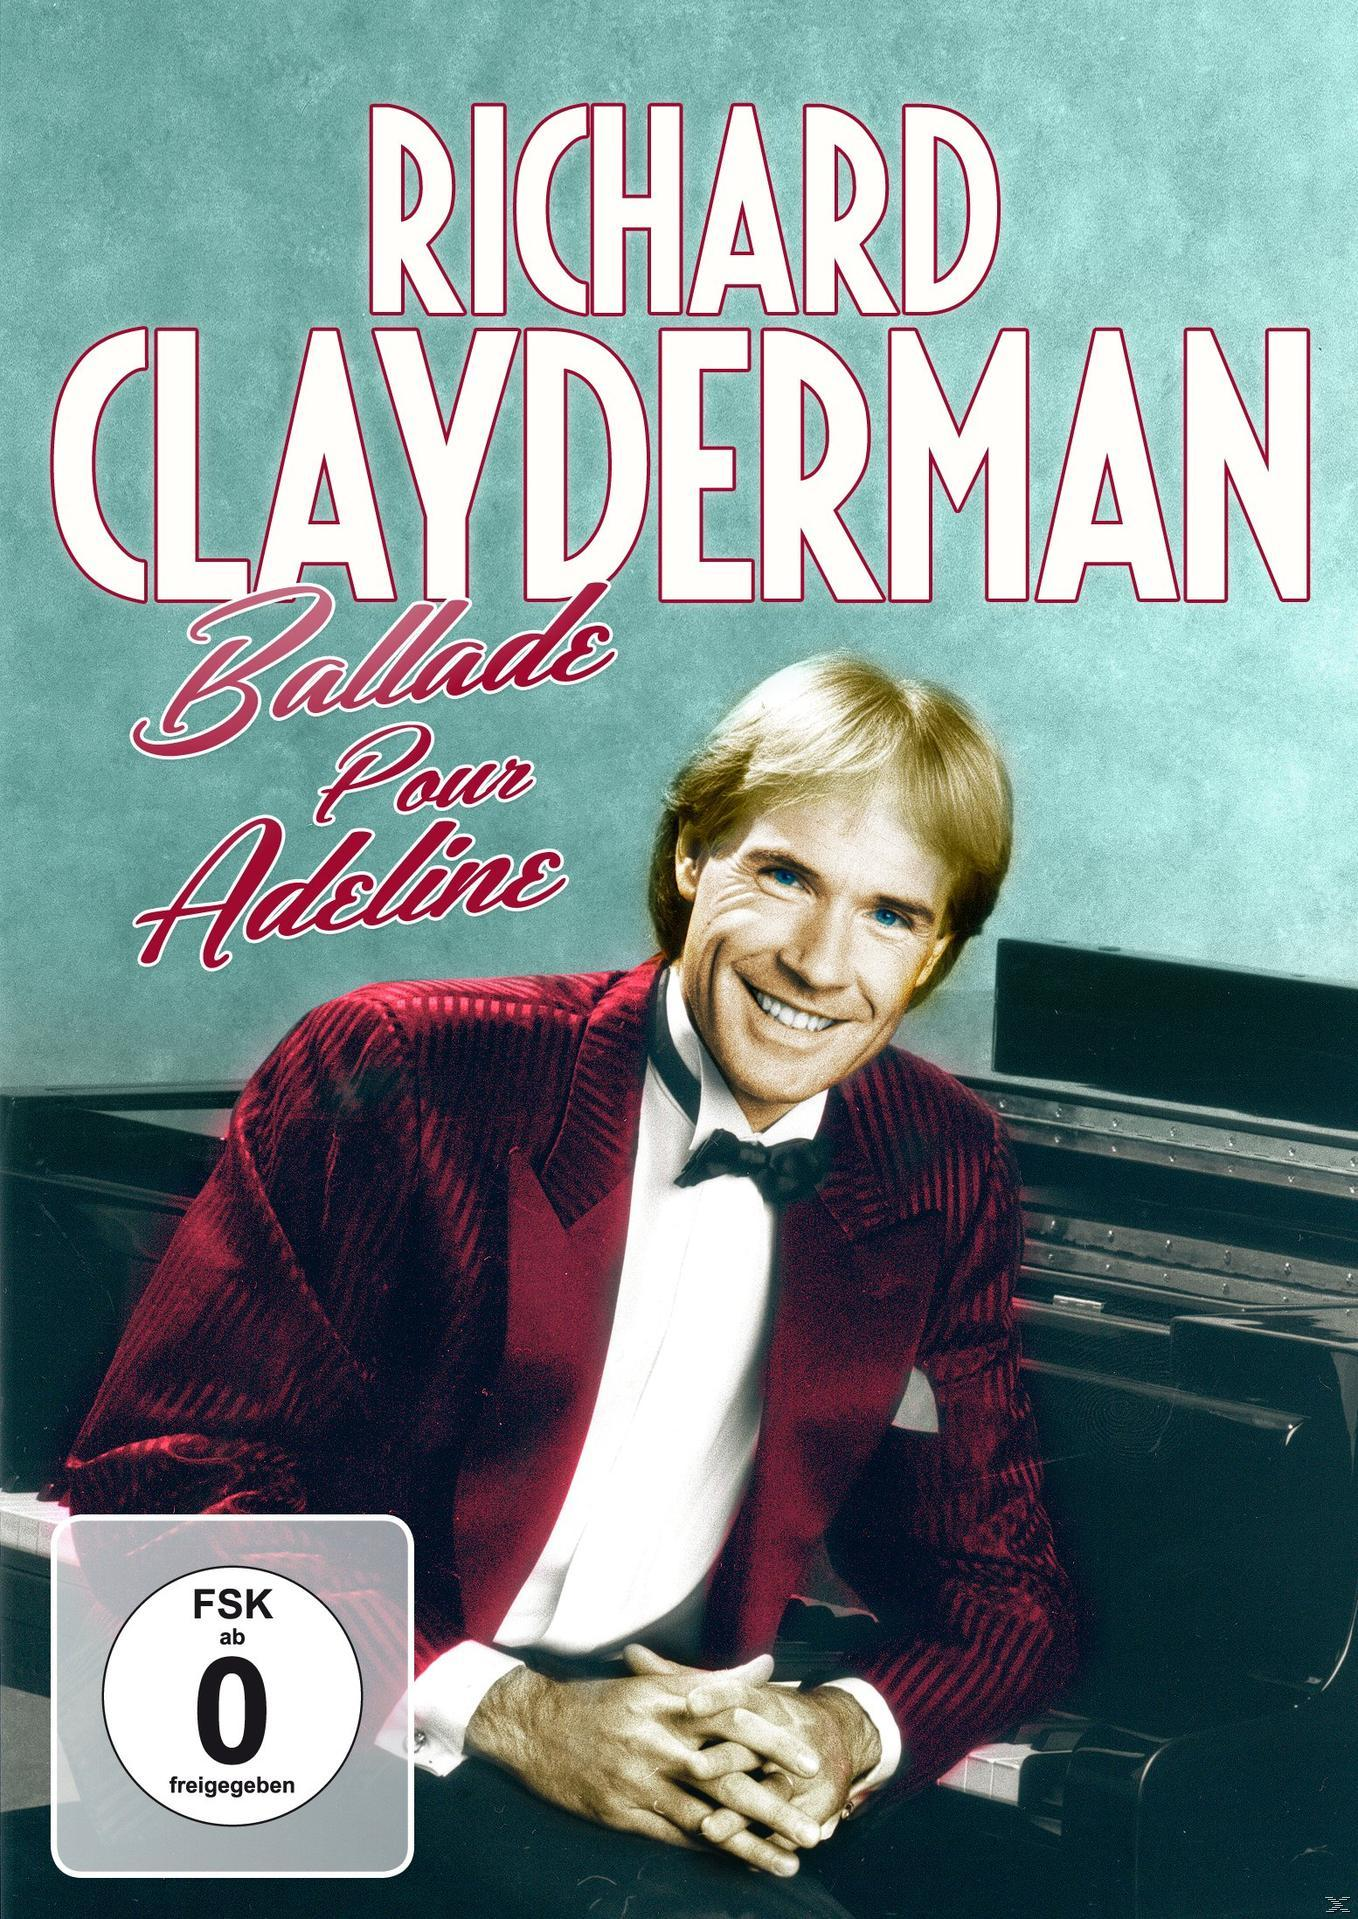 Richard Greatest Hits - Adeline: Ballade - (DVD) Pour His Clayderman